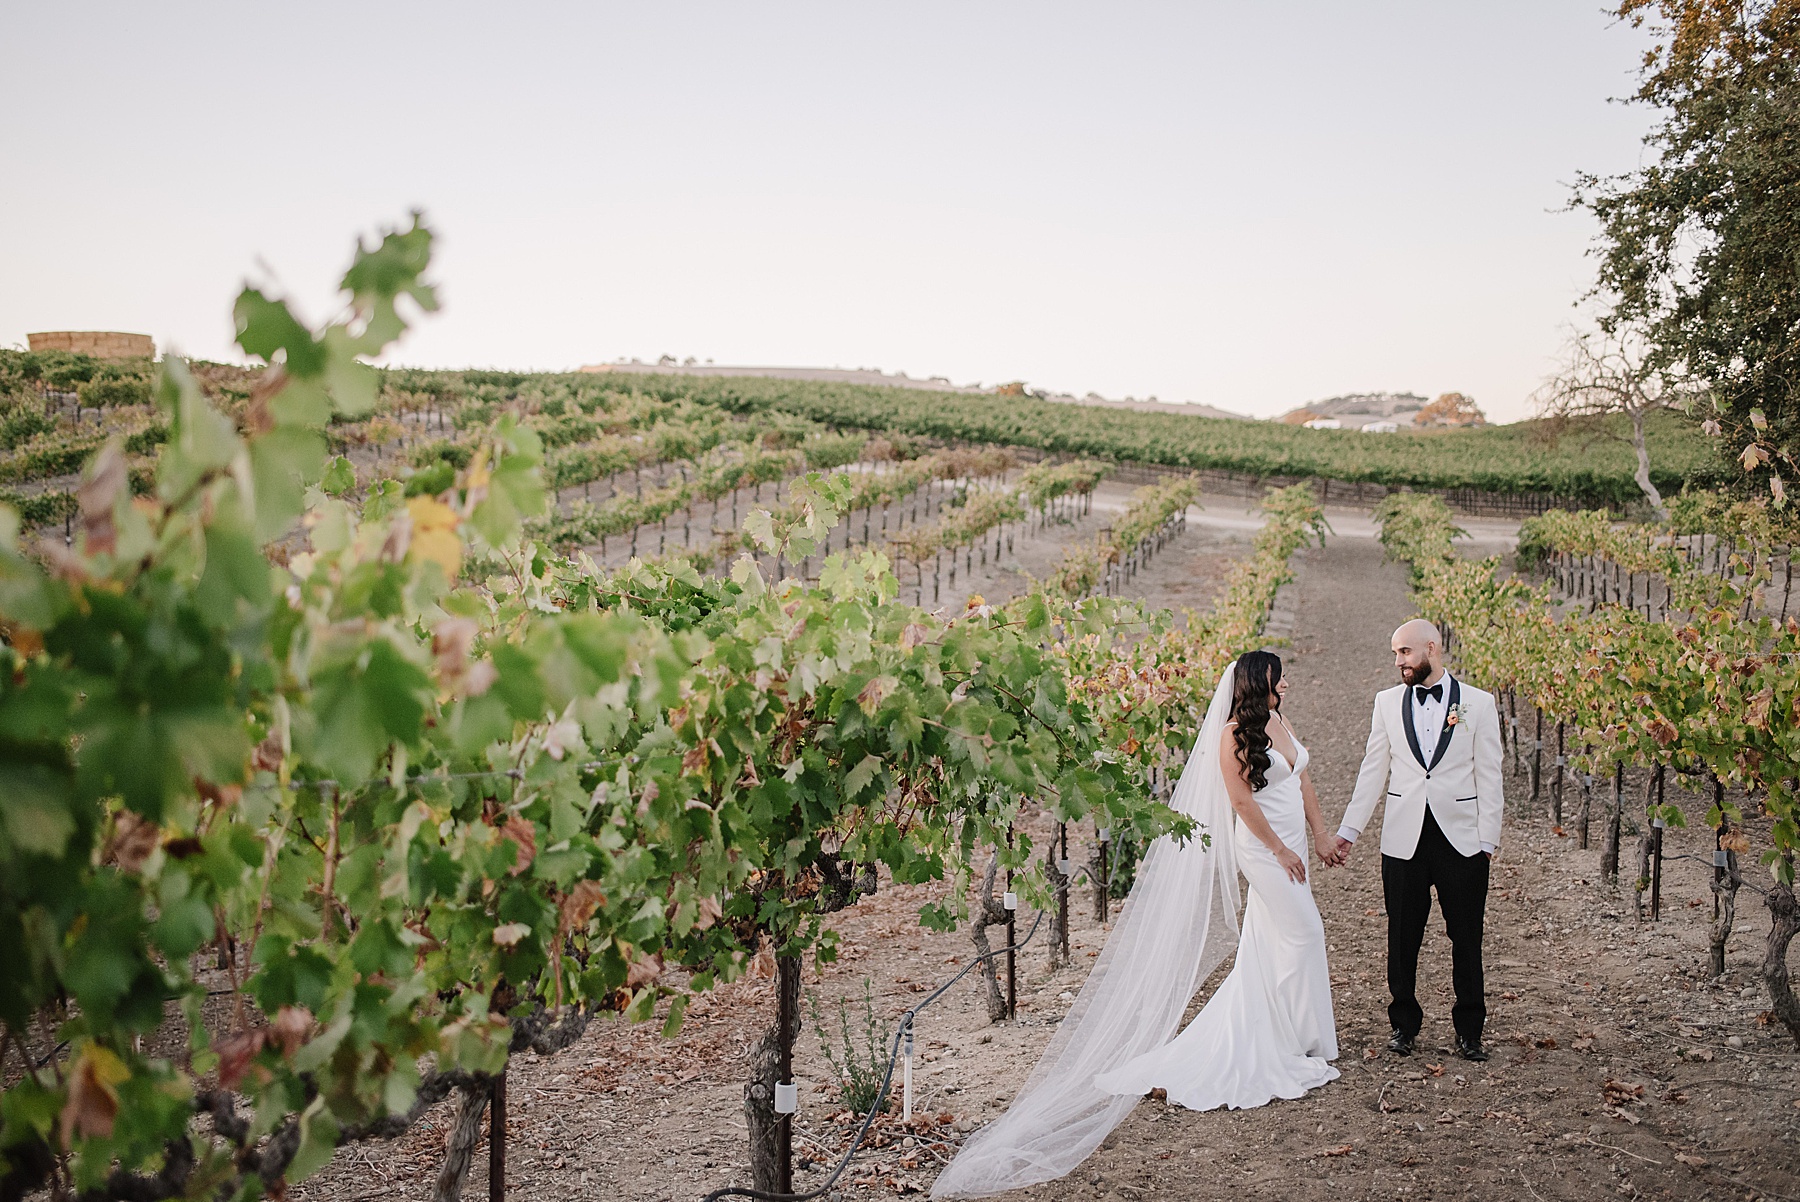 Nikkles Photography, SLO-based Wedding Photographer, shares Italian-Inspired Wedding Venues in San Luis Obispo.